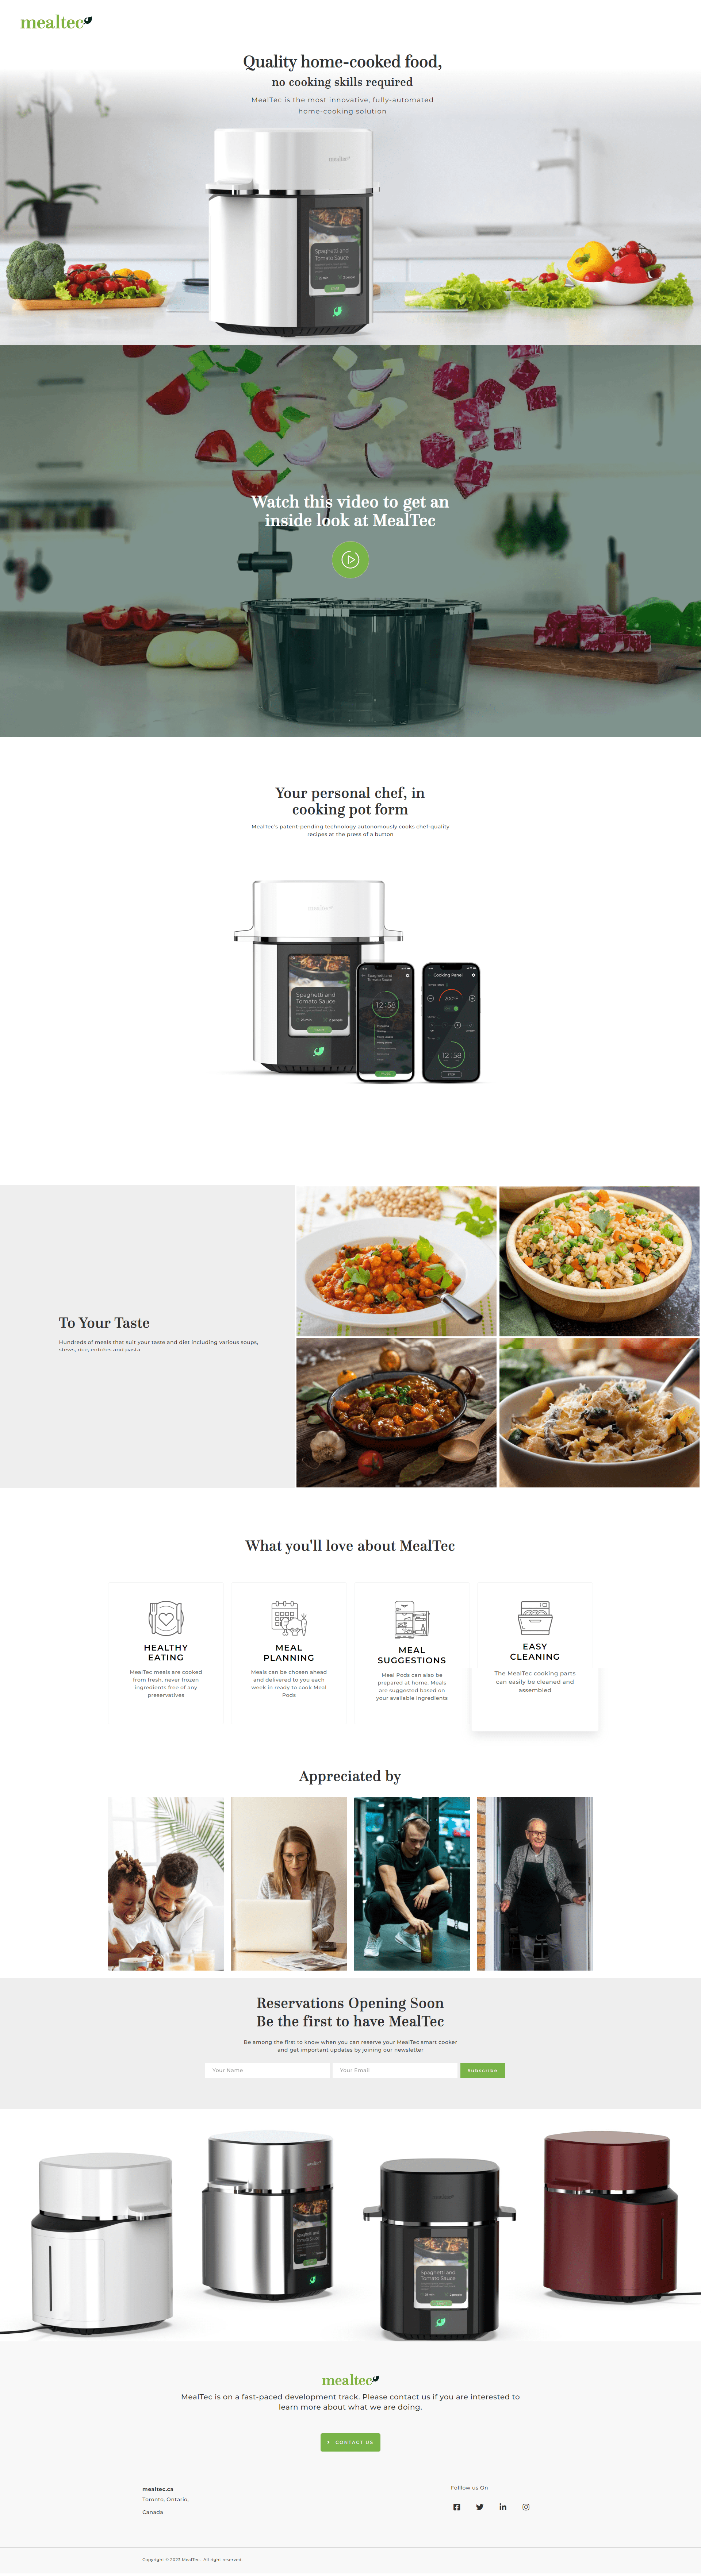 Mealtec – Quality Home Cooked Food Mealtec Ca - Wordpress Development